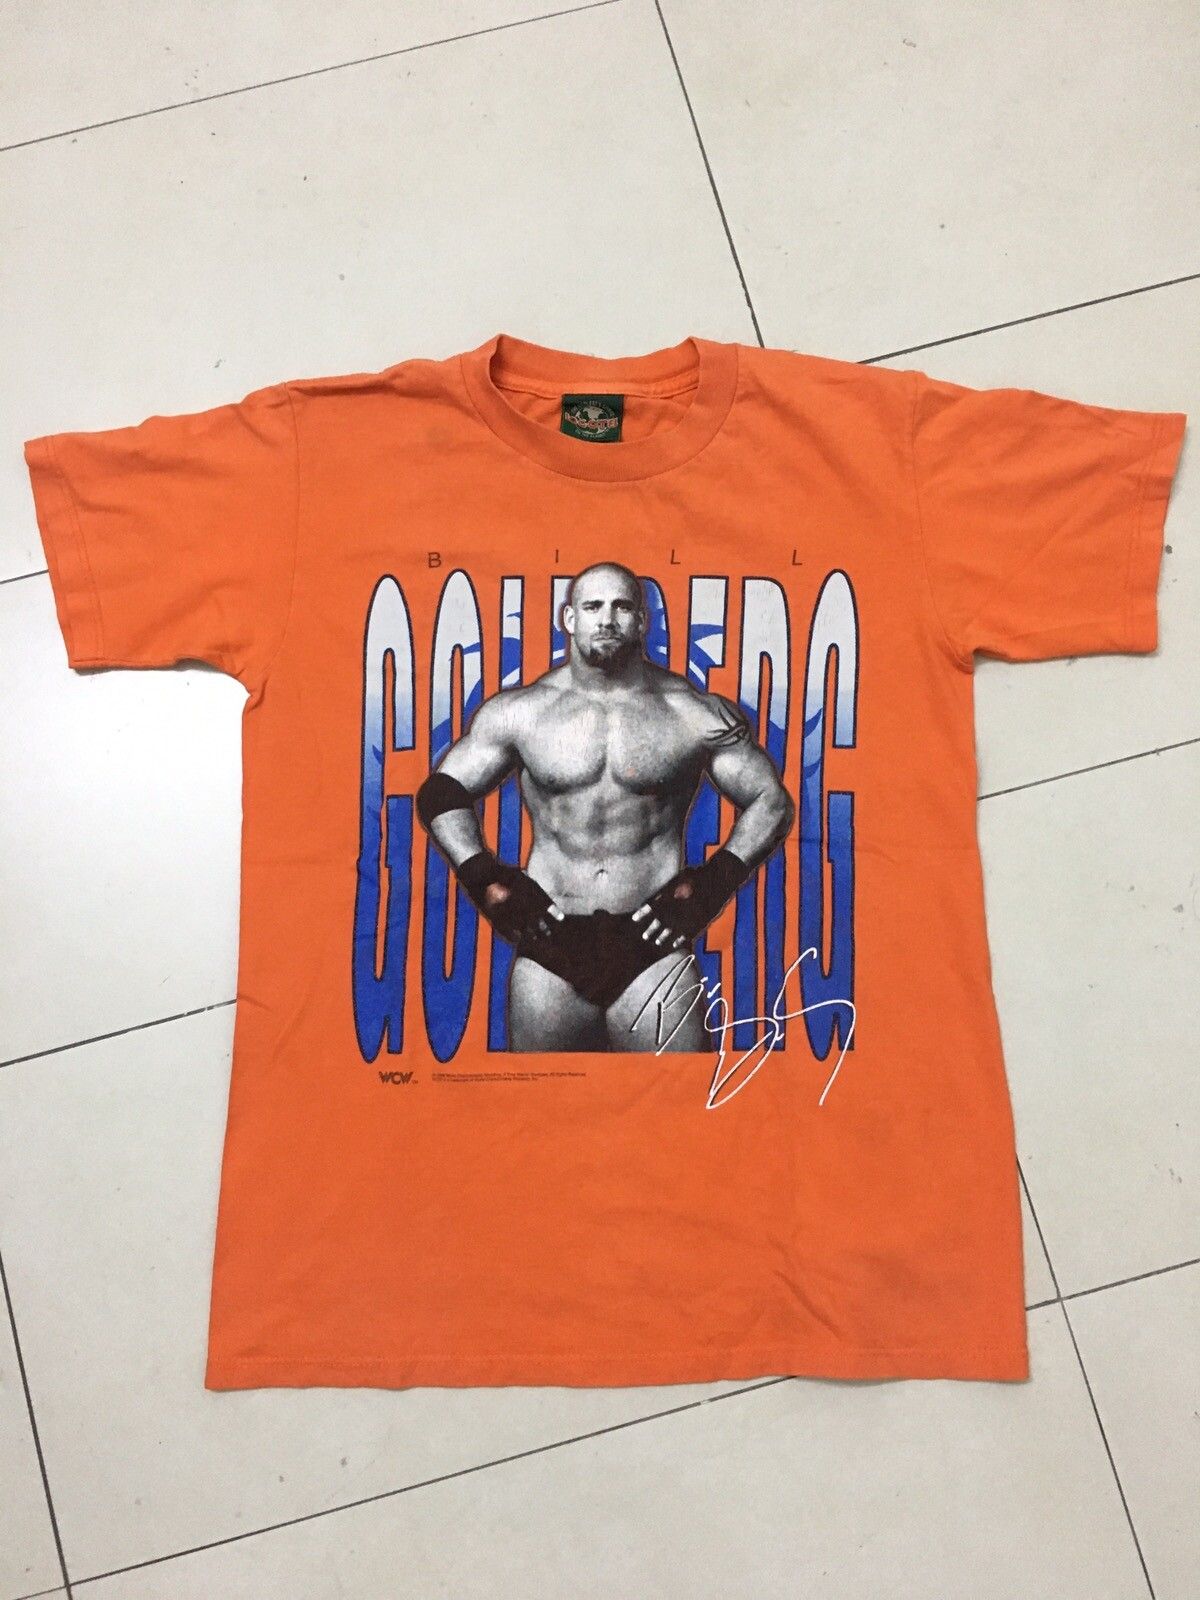 Vintage Vintage 1998 Wrestling Goldberg Wcw Wwf Wwe Tshirt Orange M Size US M / EU 48-50 / 2 - 1 Preview